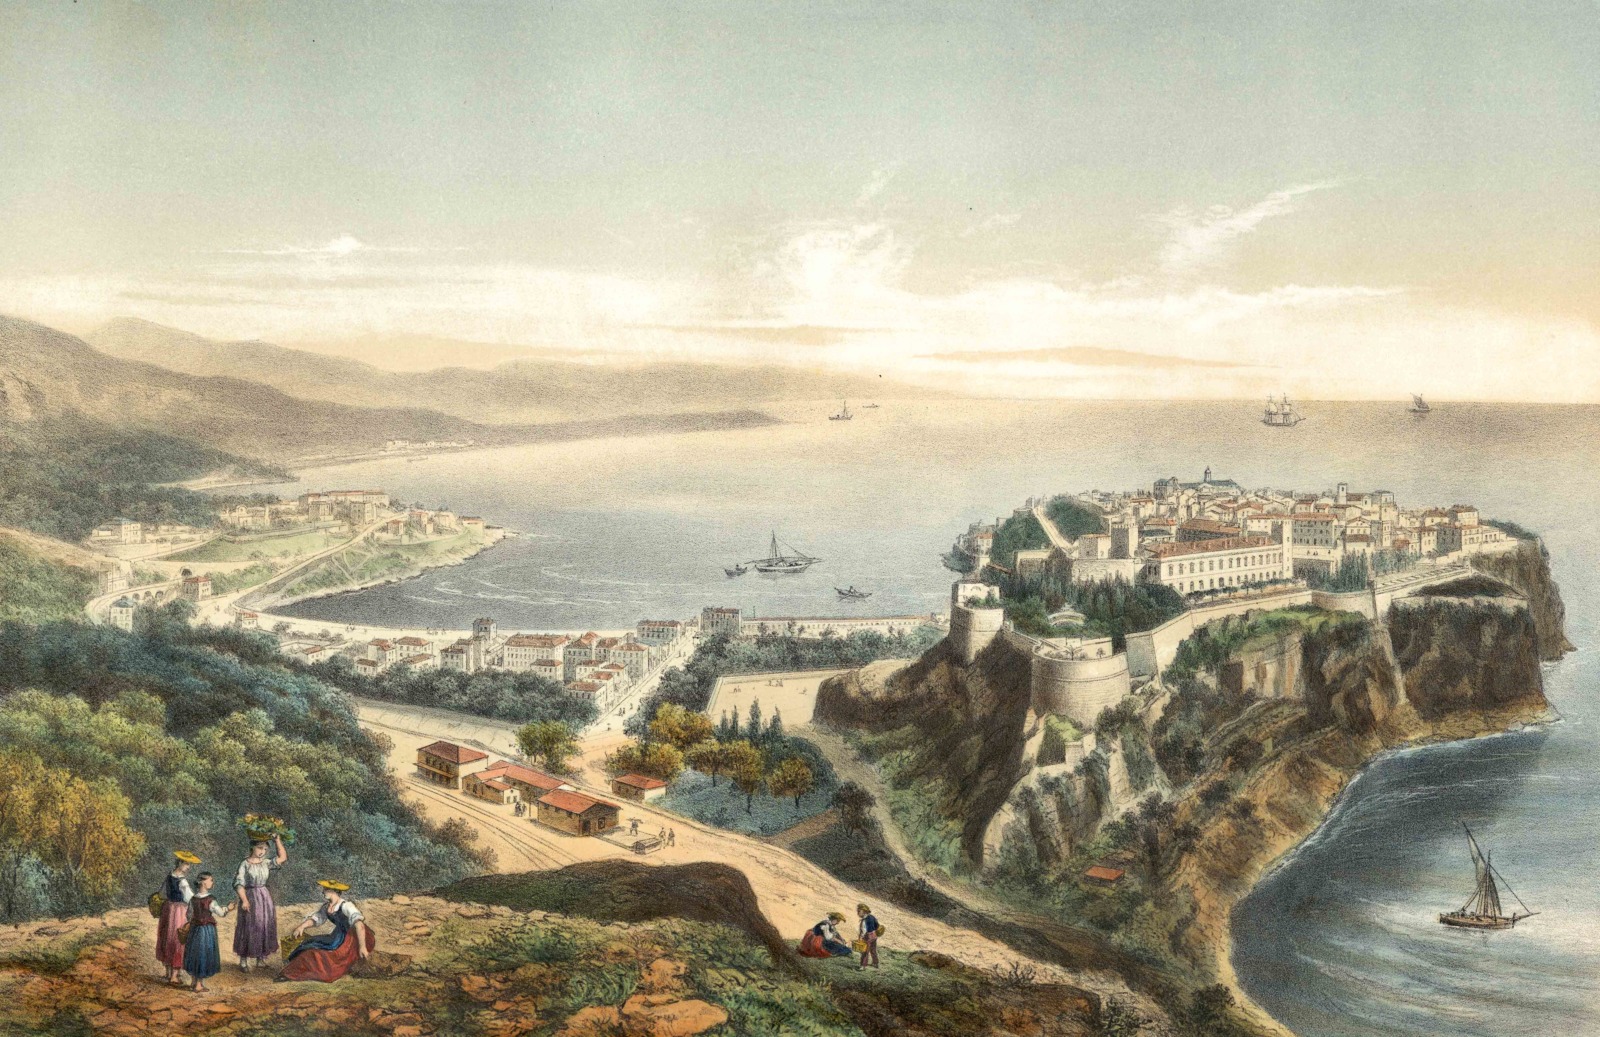 Monaco in the 19th century